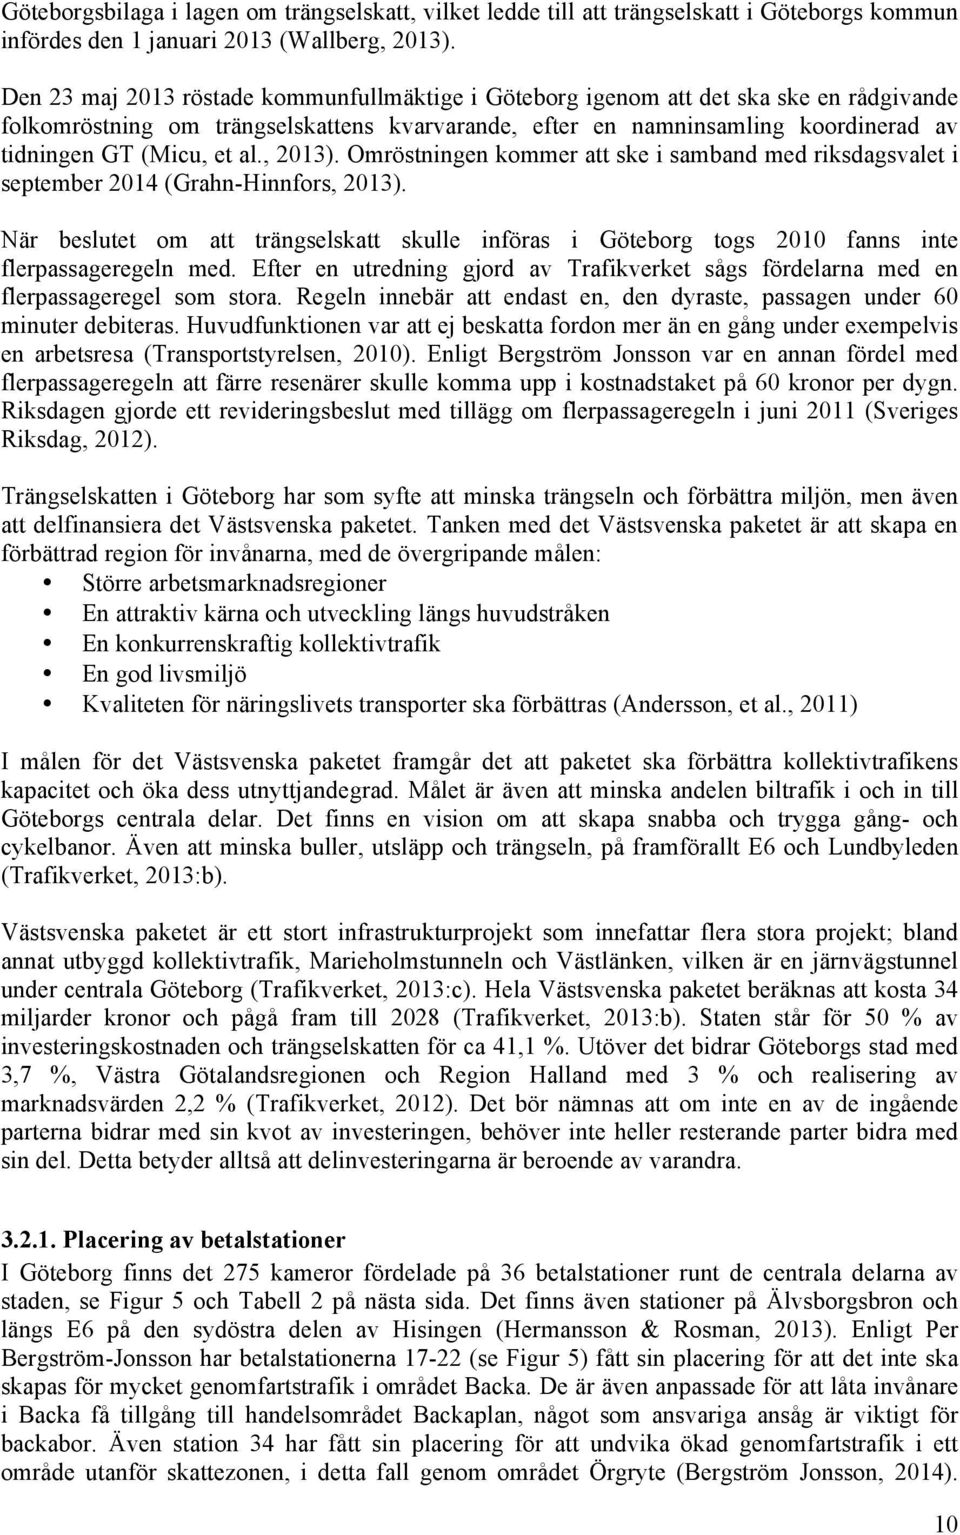 al., 2013). Omröstningen kommer att ske i samband med riksdagsvalet i september 2014 (Grahn-Hinnfors, 2013).